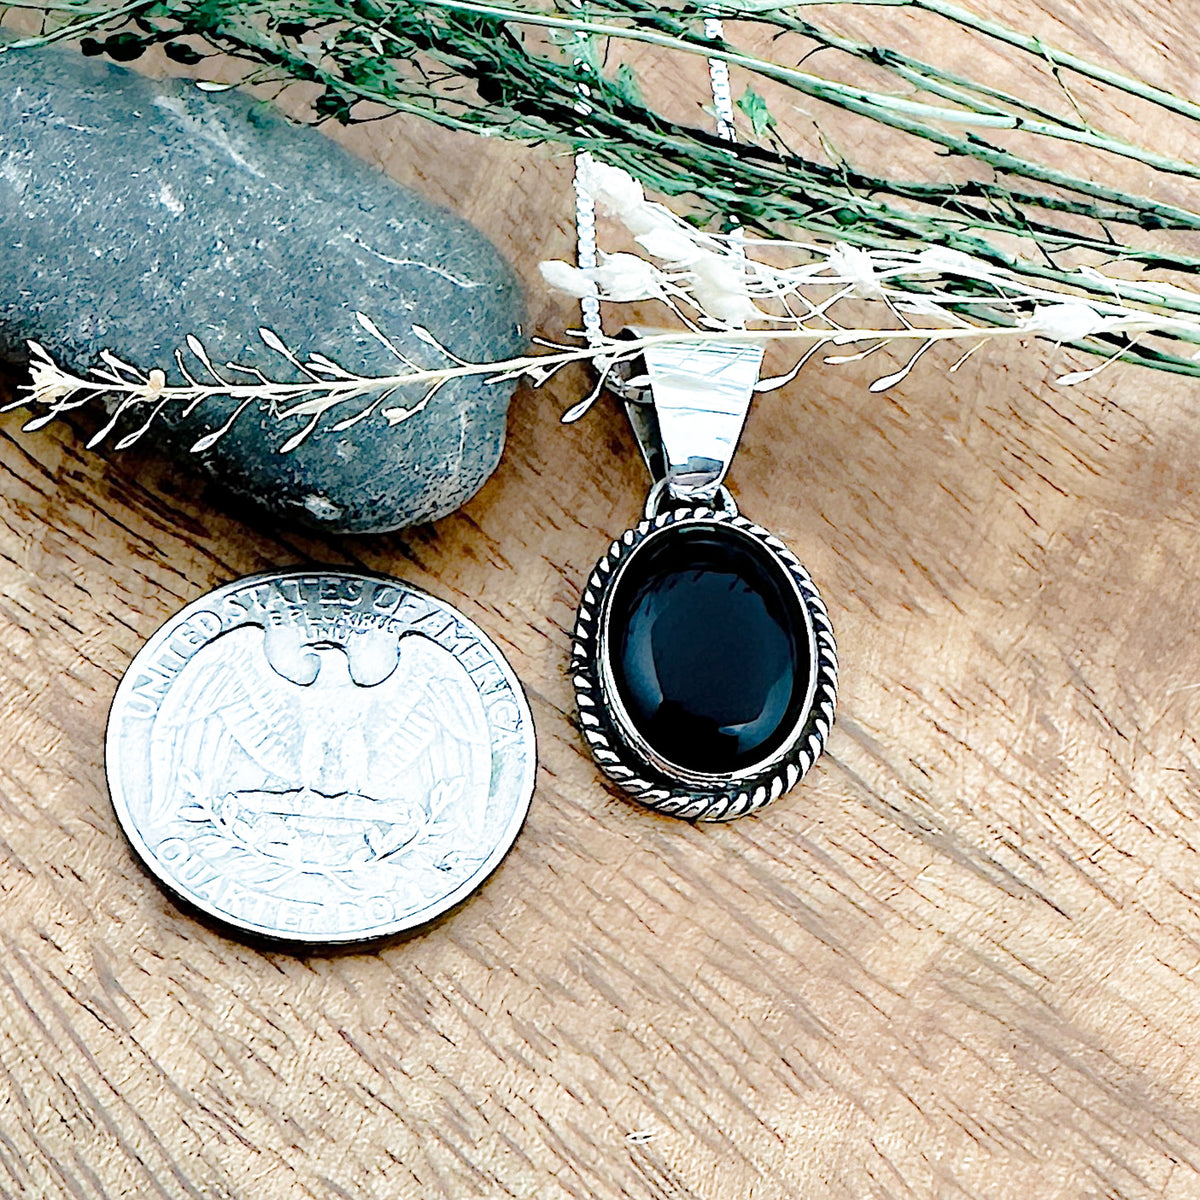 Comparison shot of a US quarter coin and a black onyx pendant